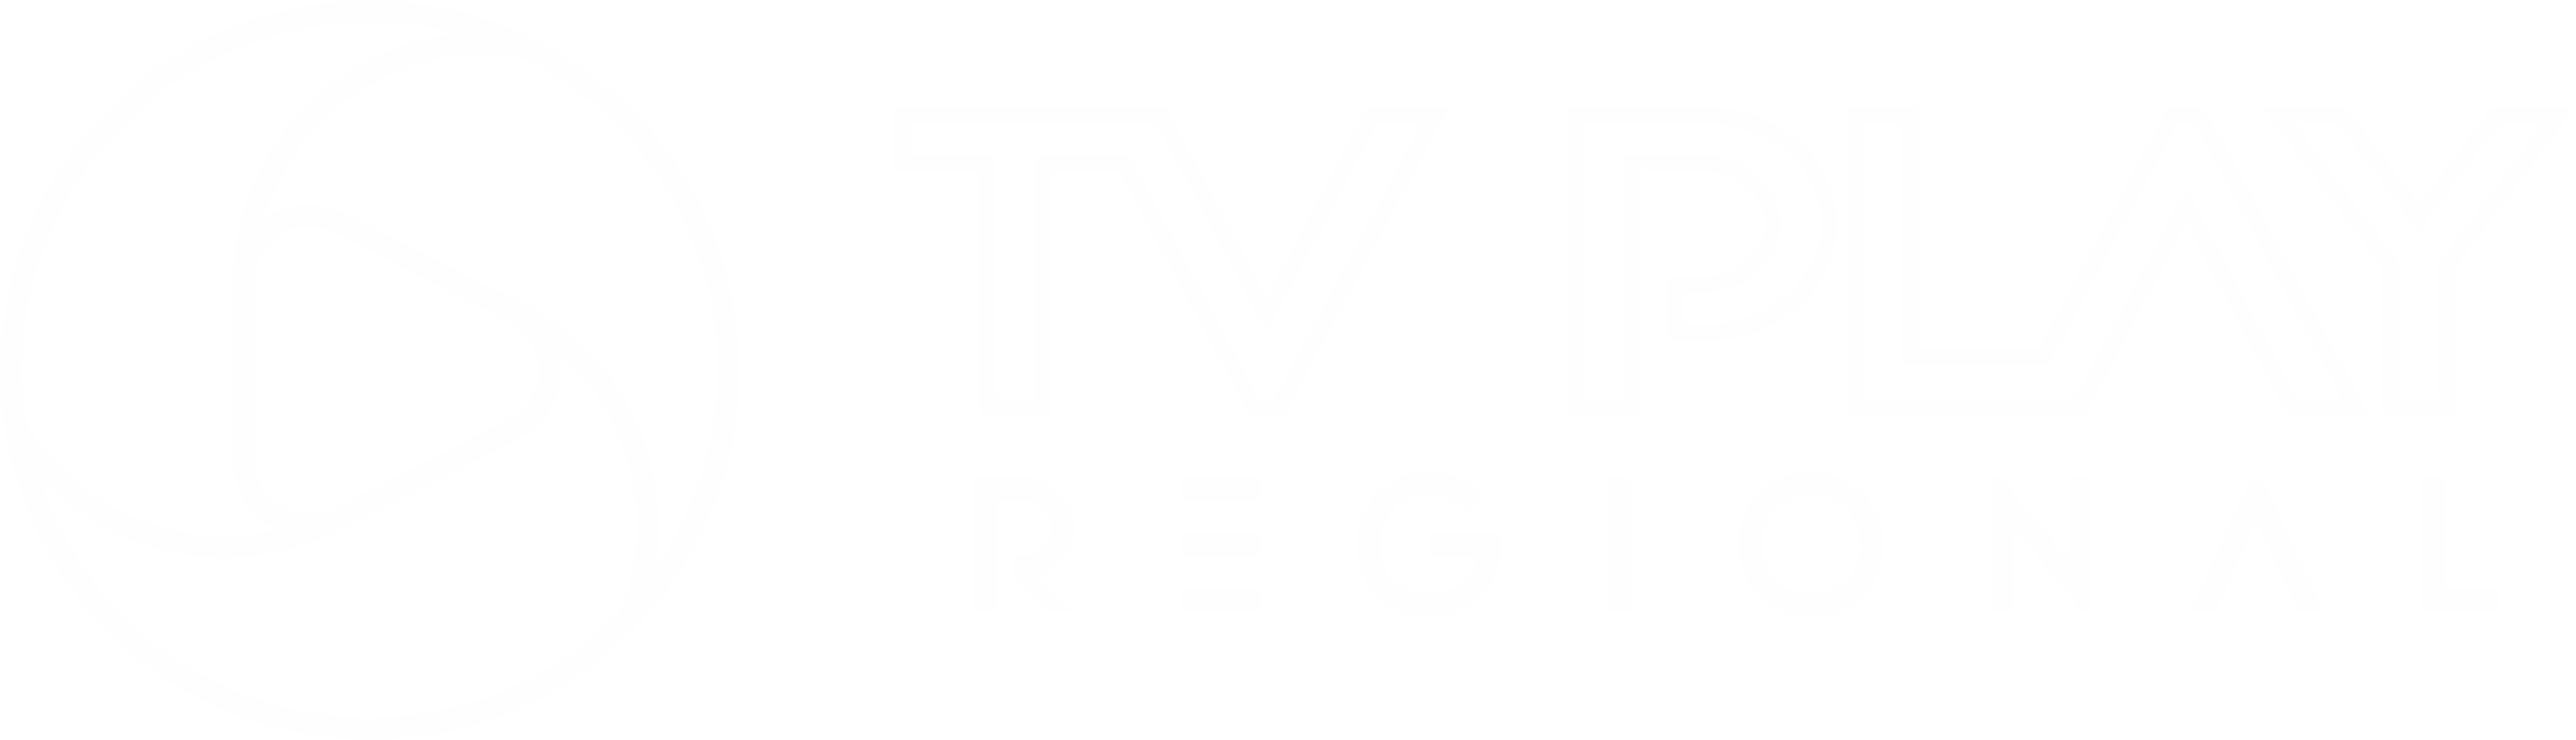 TV Play Regional